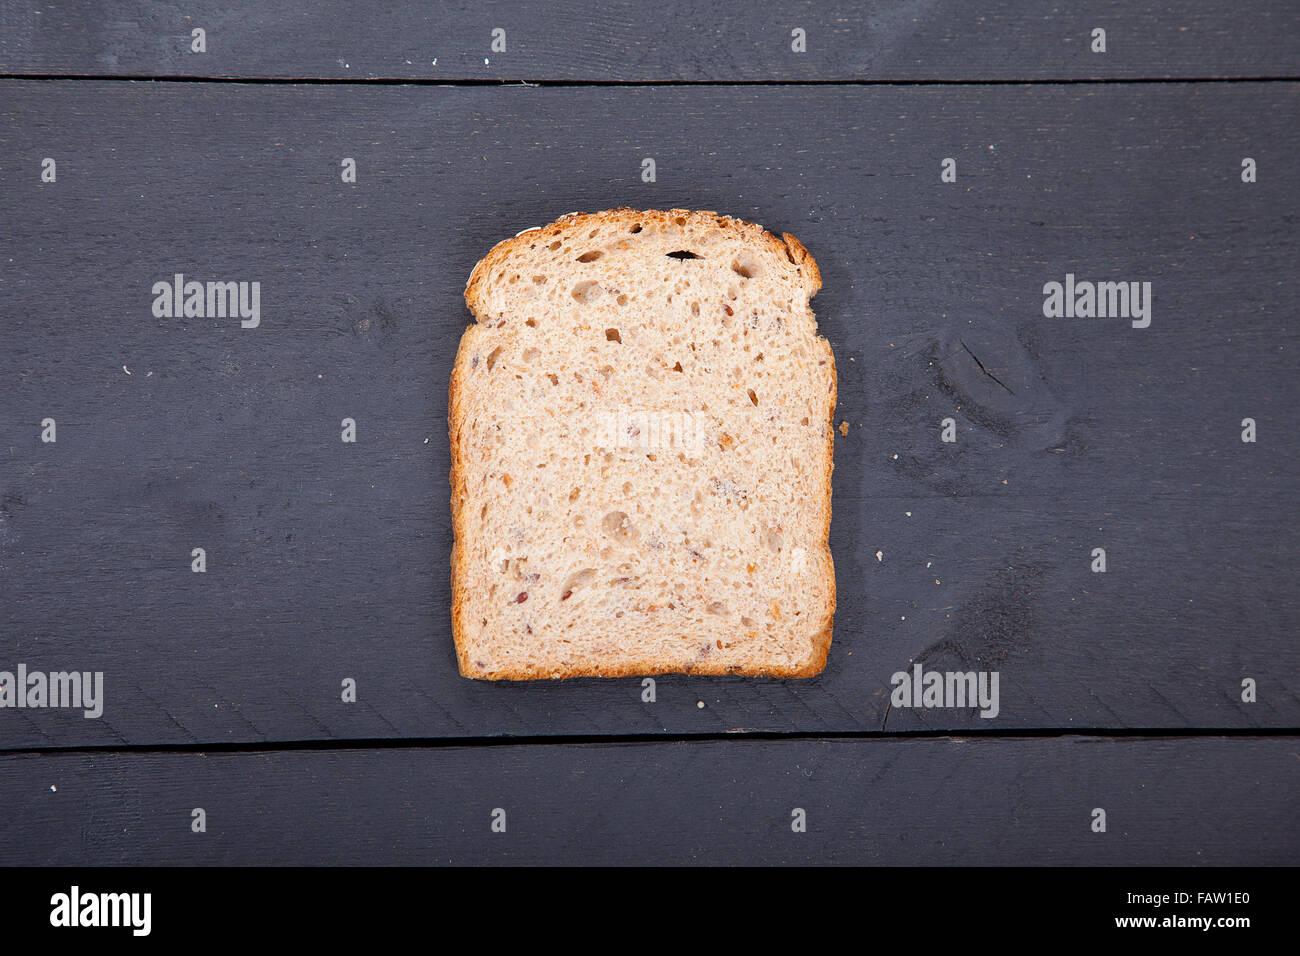 Gluten free bread on black wooden background Stock Photo